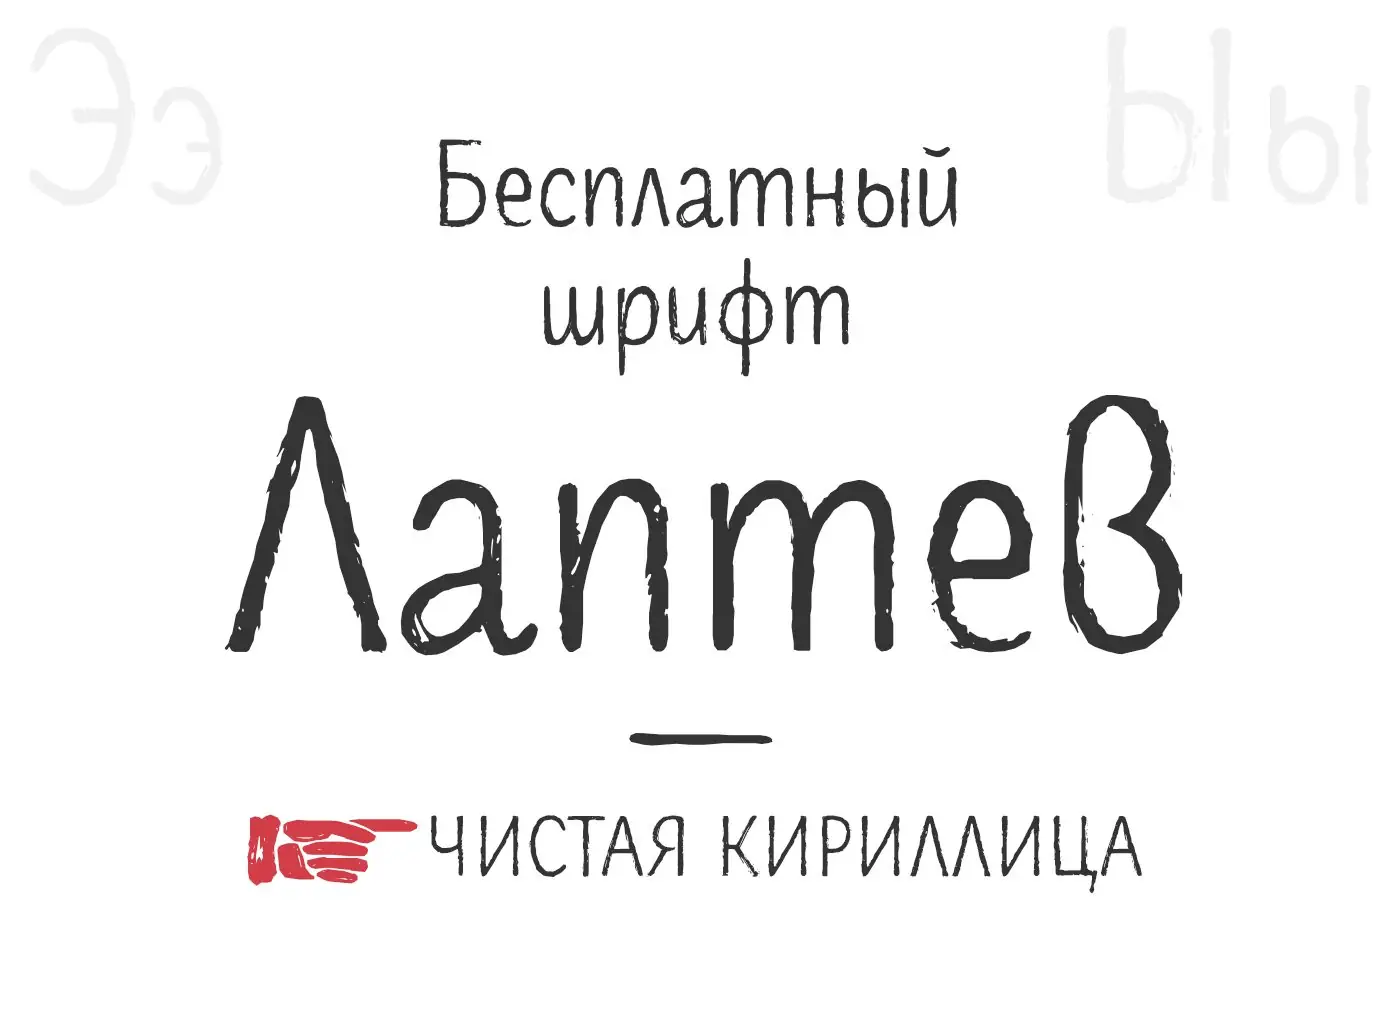 Шрифт Laptev Brush Cyrillic